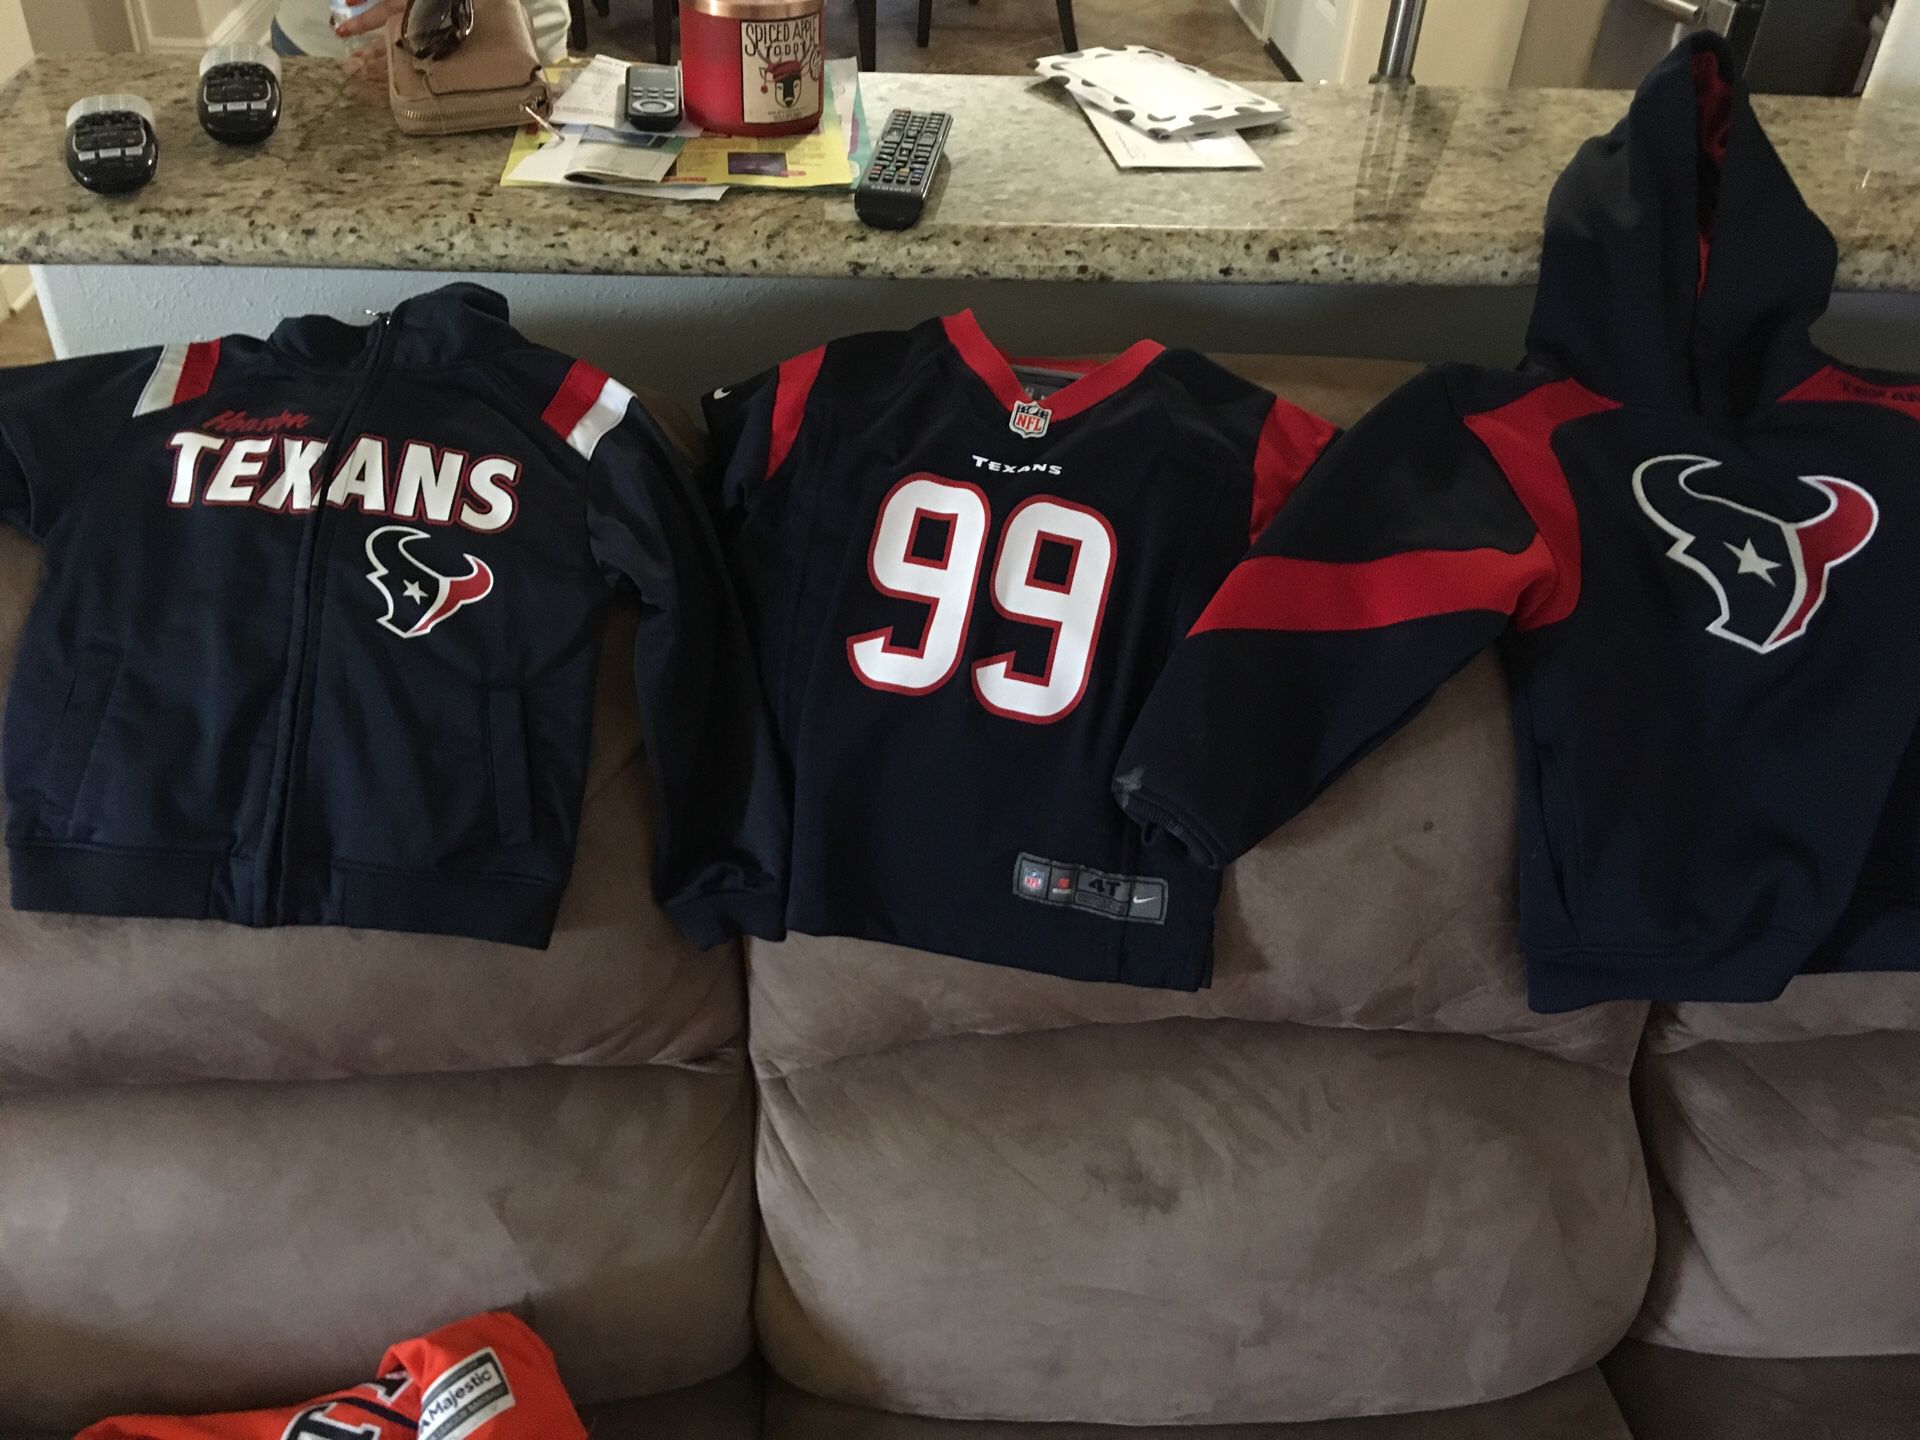 Texans jersey